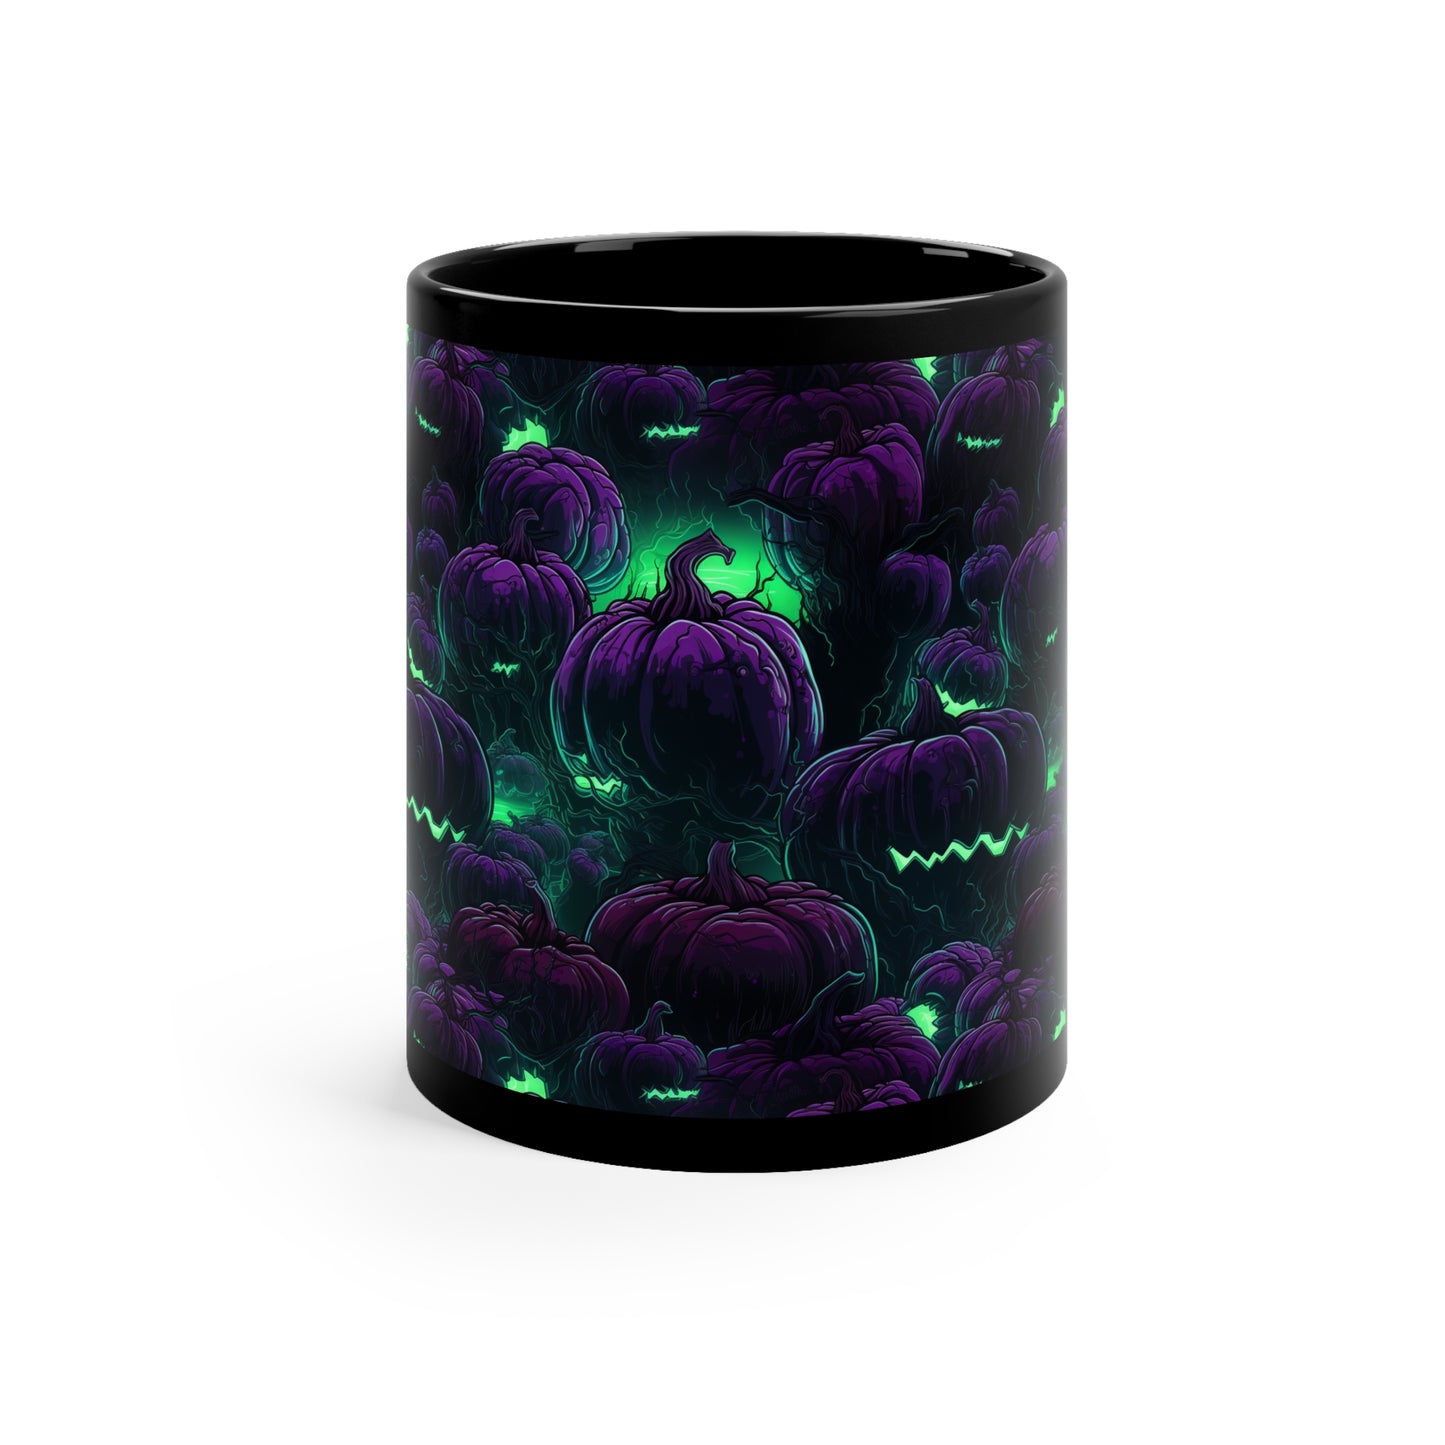 Mug Spooky Purple Halloween Pumpkins - Frogos Design